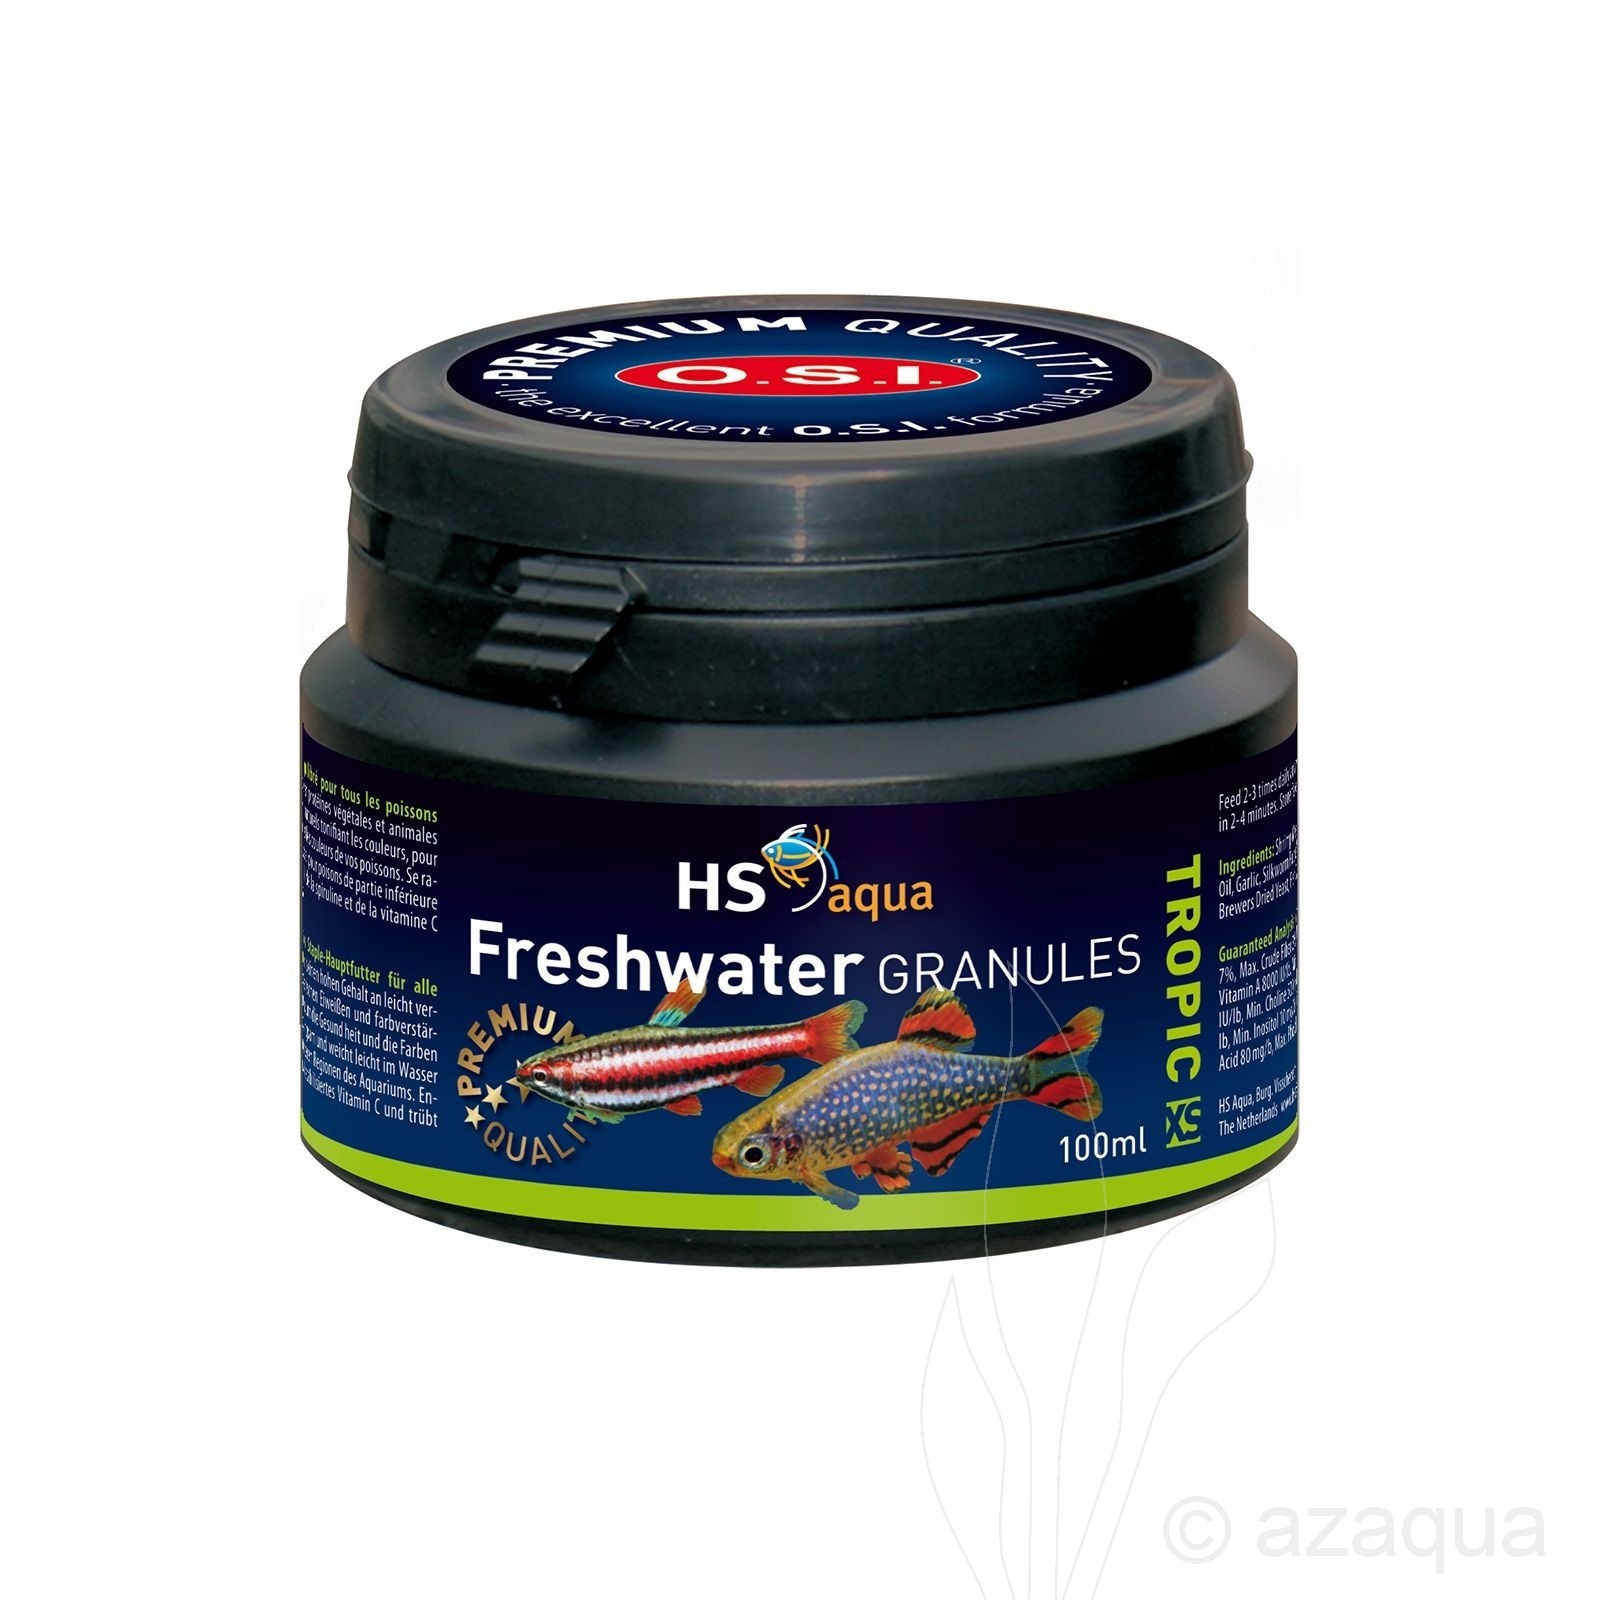 HS Aqua Freshwater Granules XS 100ml